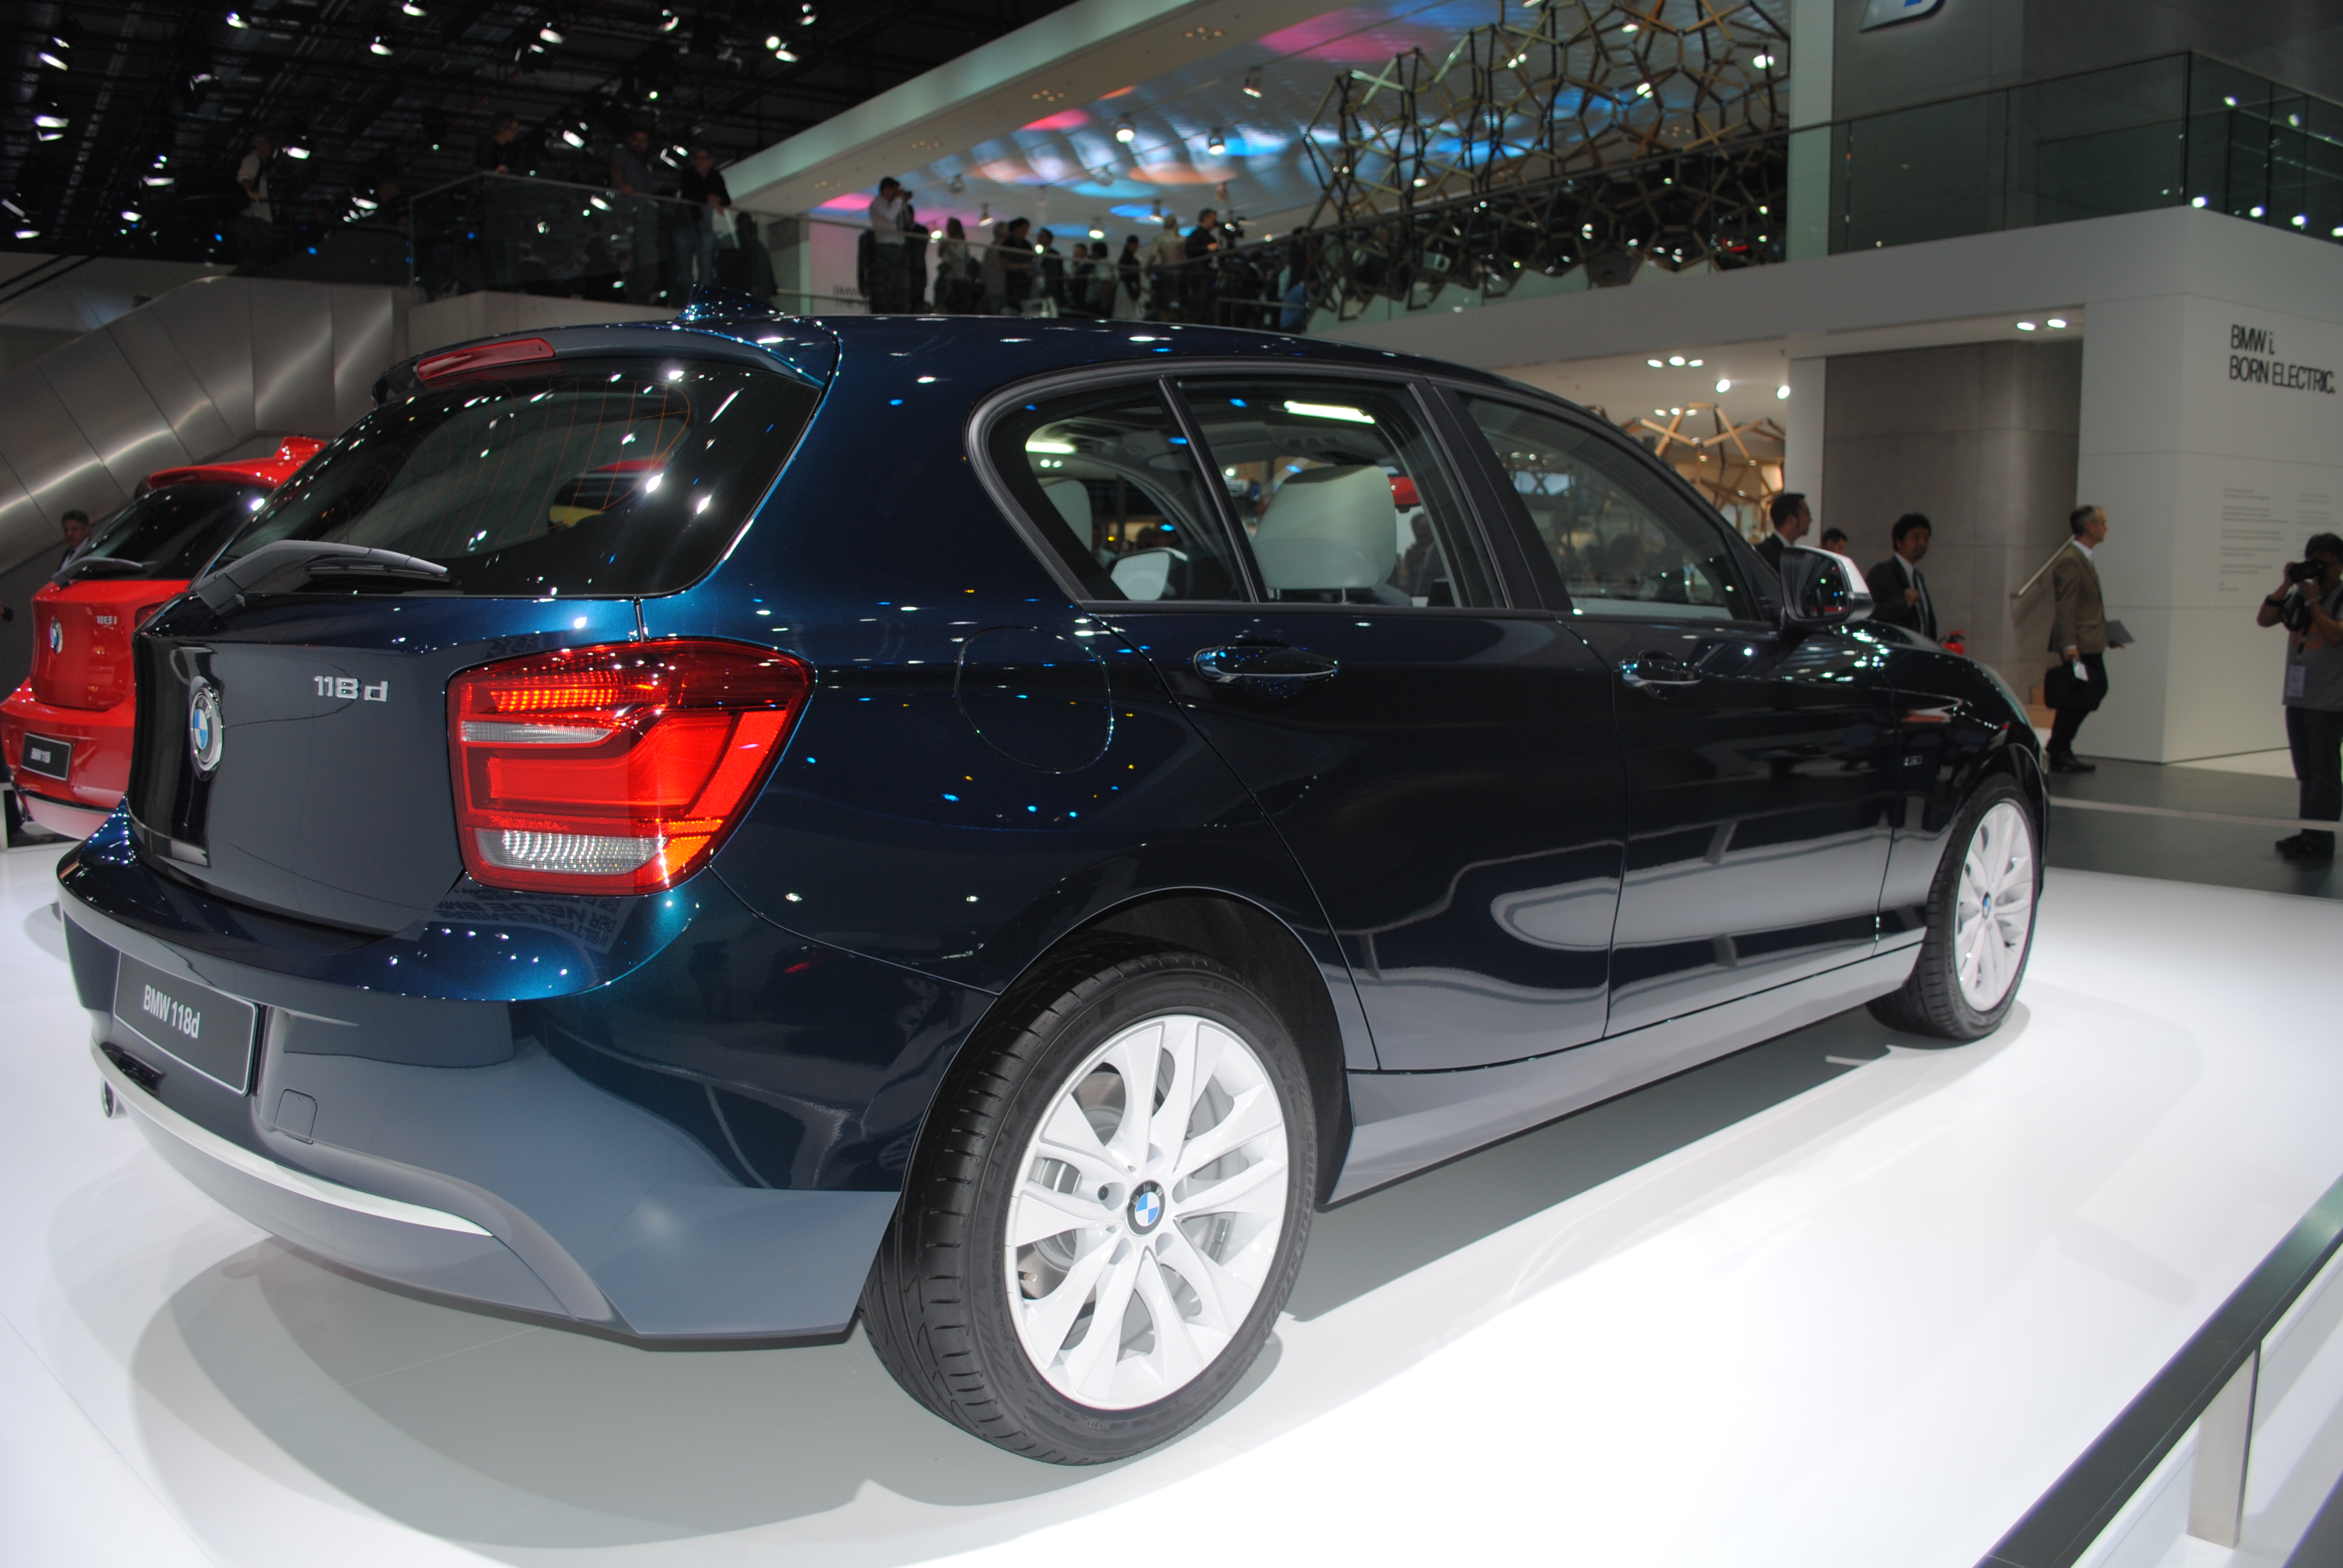 New BMW 1 Series at the Frankfurt Motor Show 2011 | Flickr - Photo ...